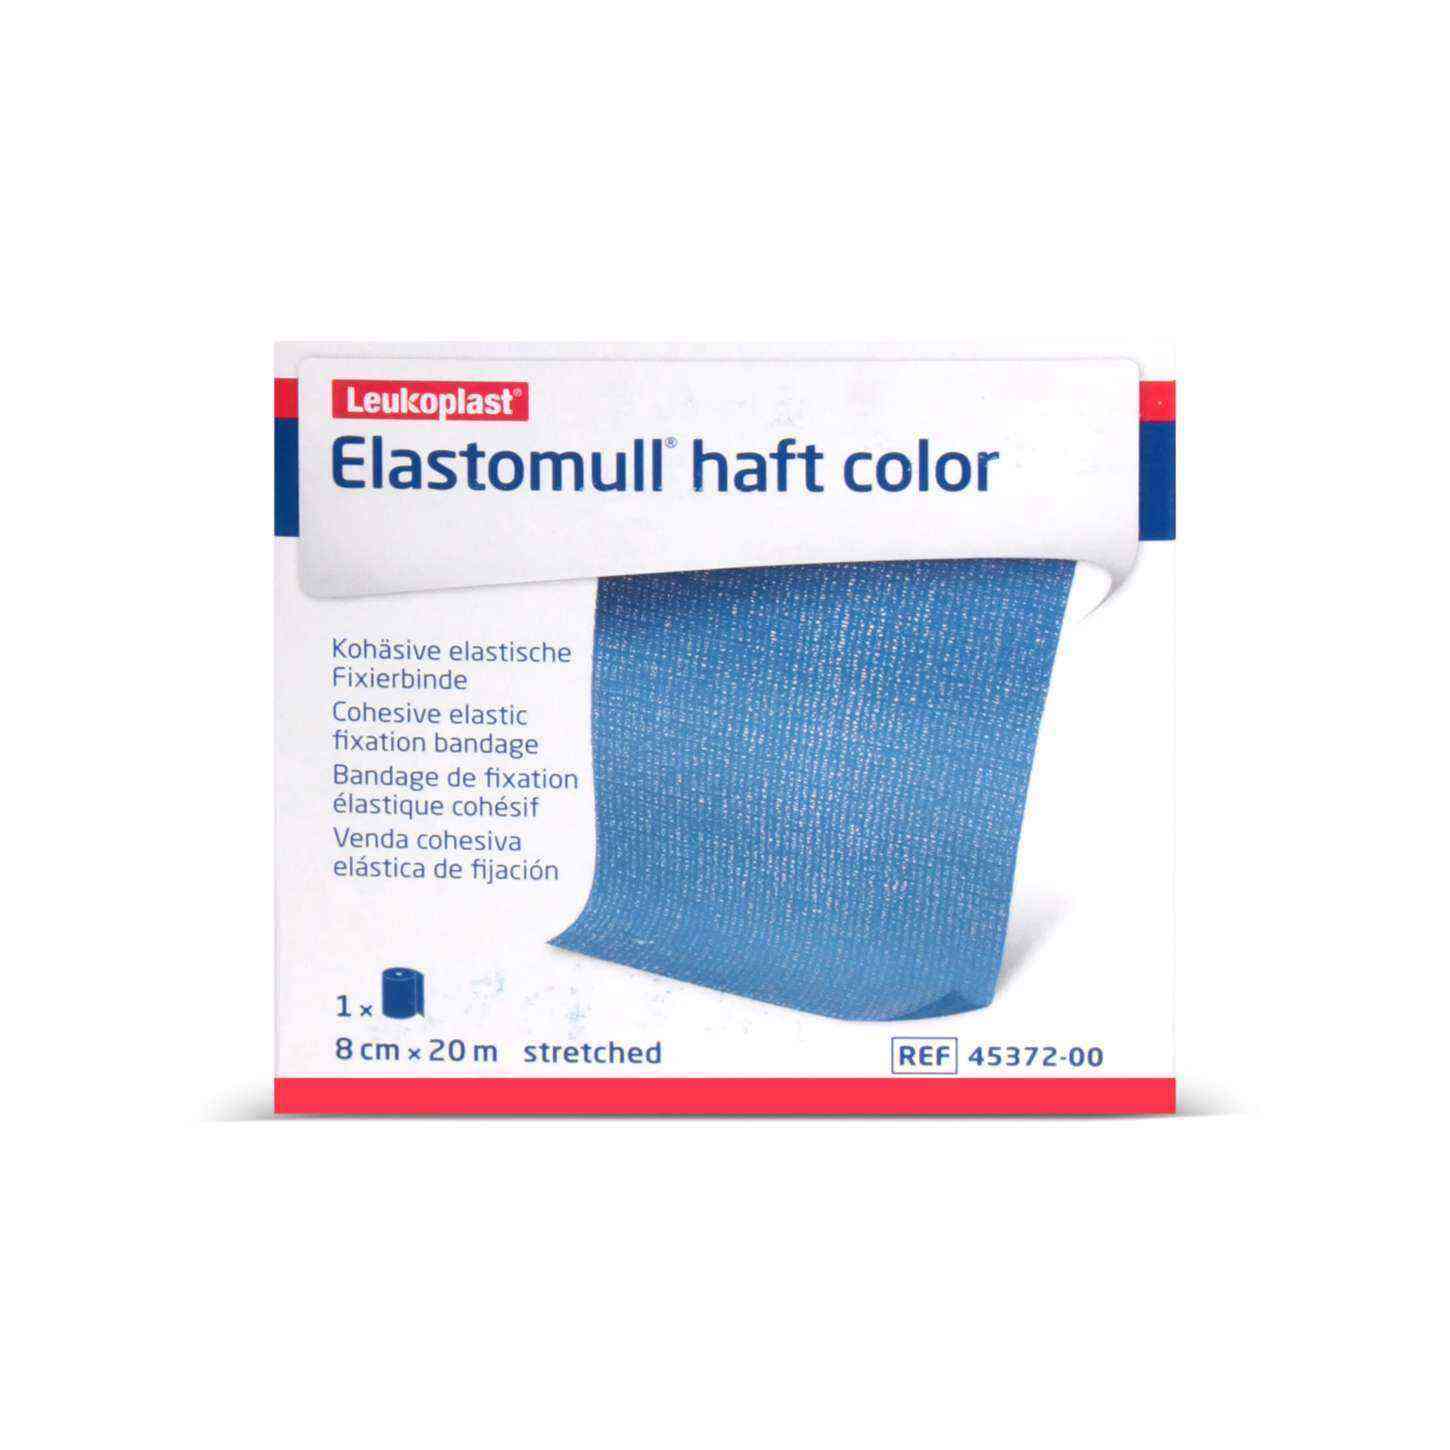 Elastomull Haft LF Bsn  Fiksasyon Bandajı 8cm x 20m Mavi